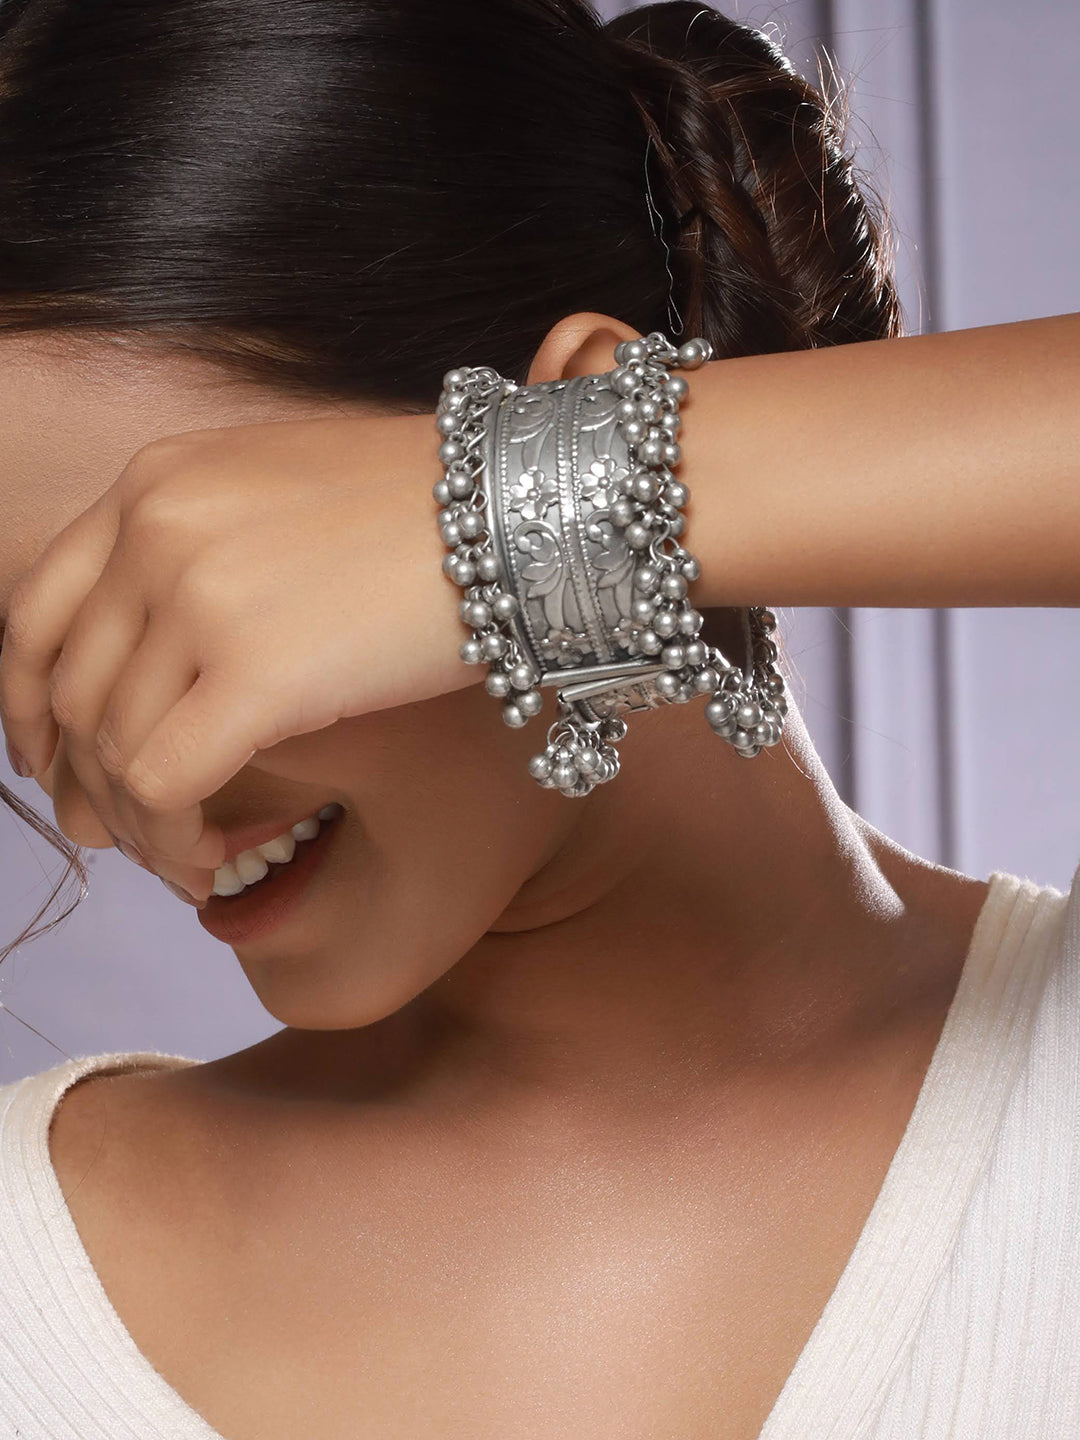 German Silver Oxidised Silver-Plated Bangle-Style Bracelet